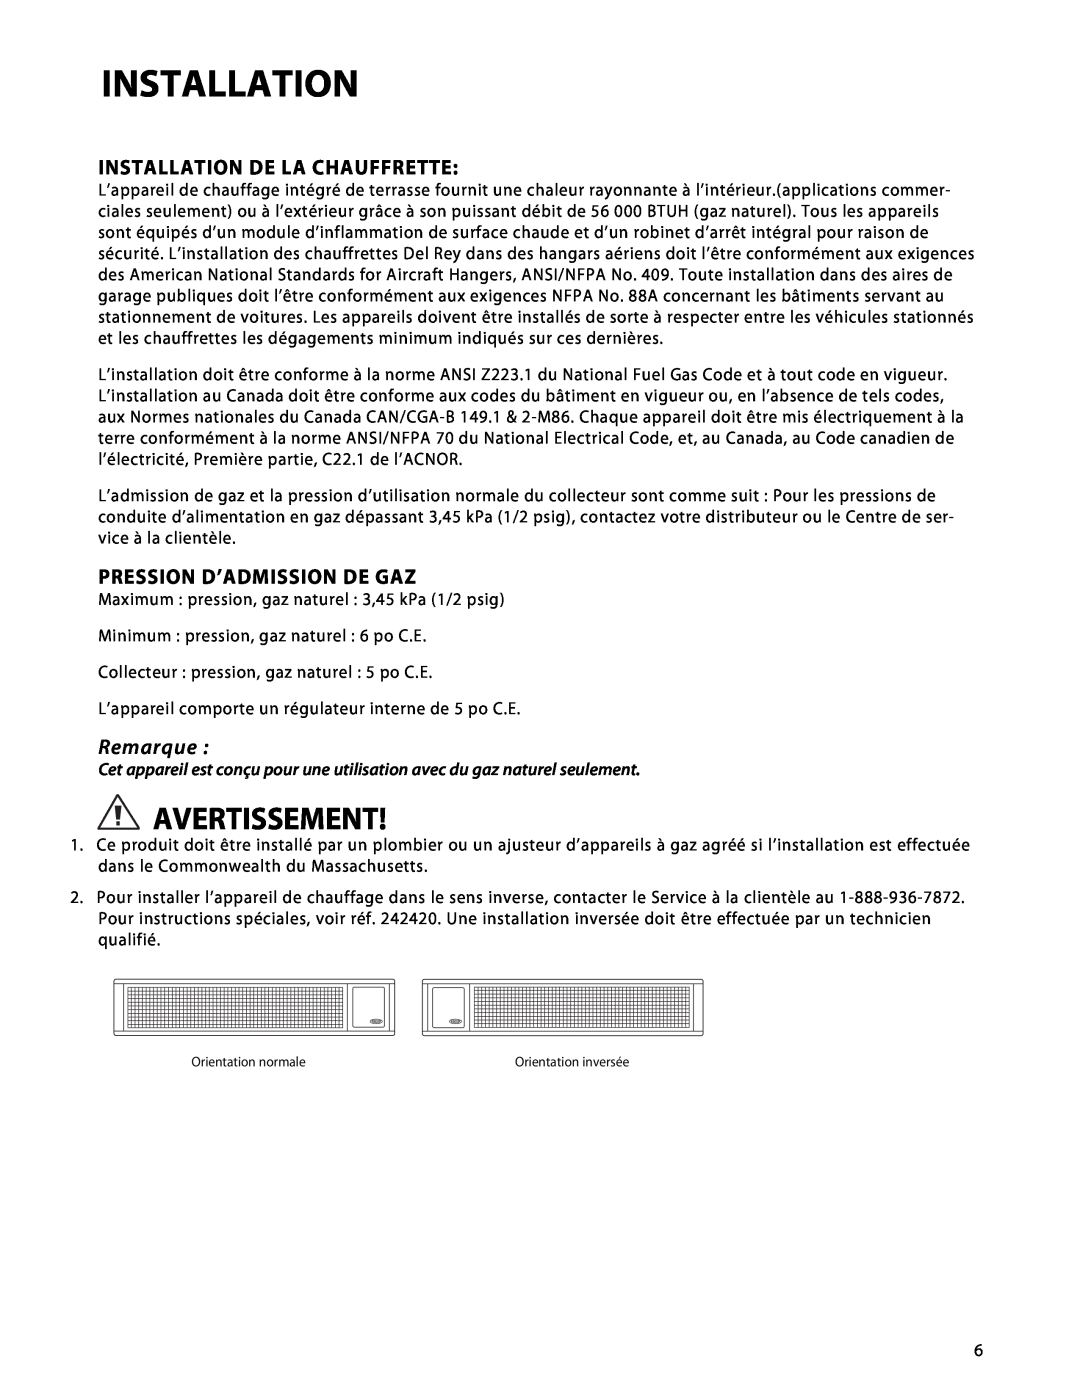 Fisher & Paykel DRH-48N manual Installation De La Chauffrette, Pression D’Admission De Gaz, Avertissement, Remarque 